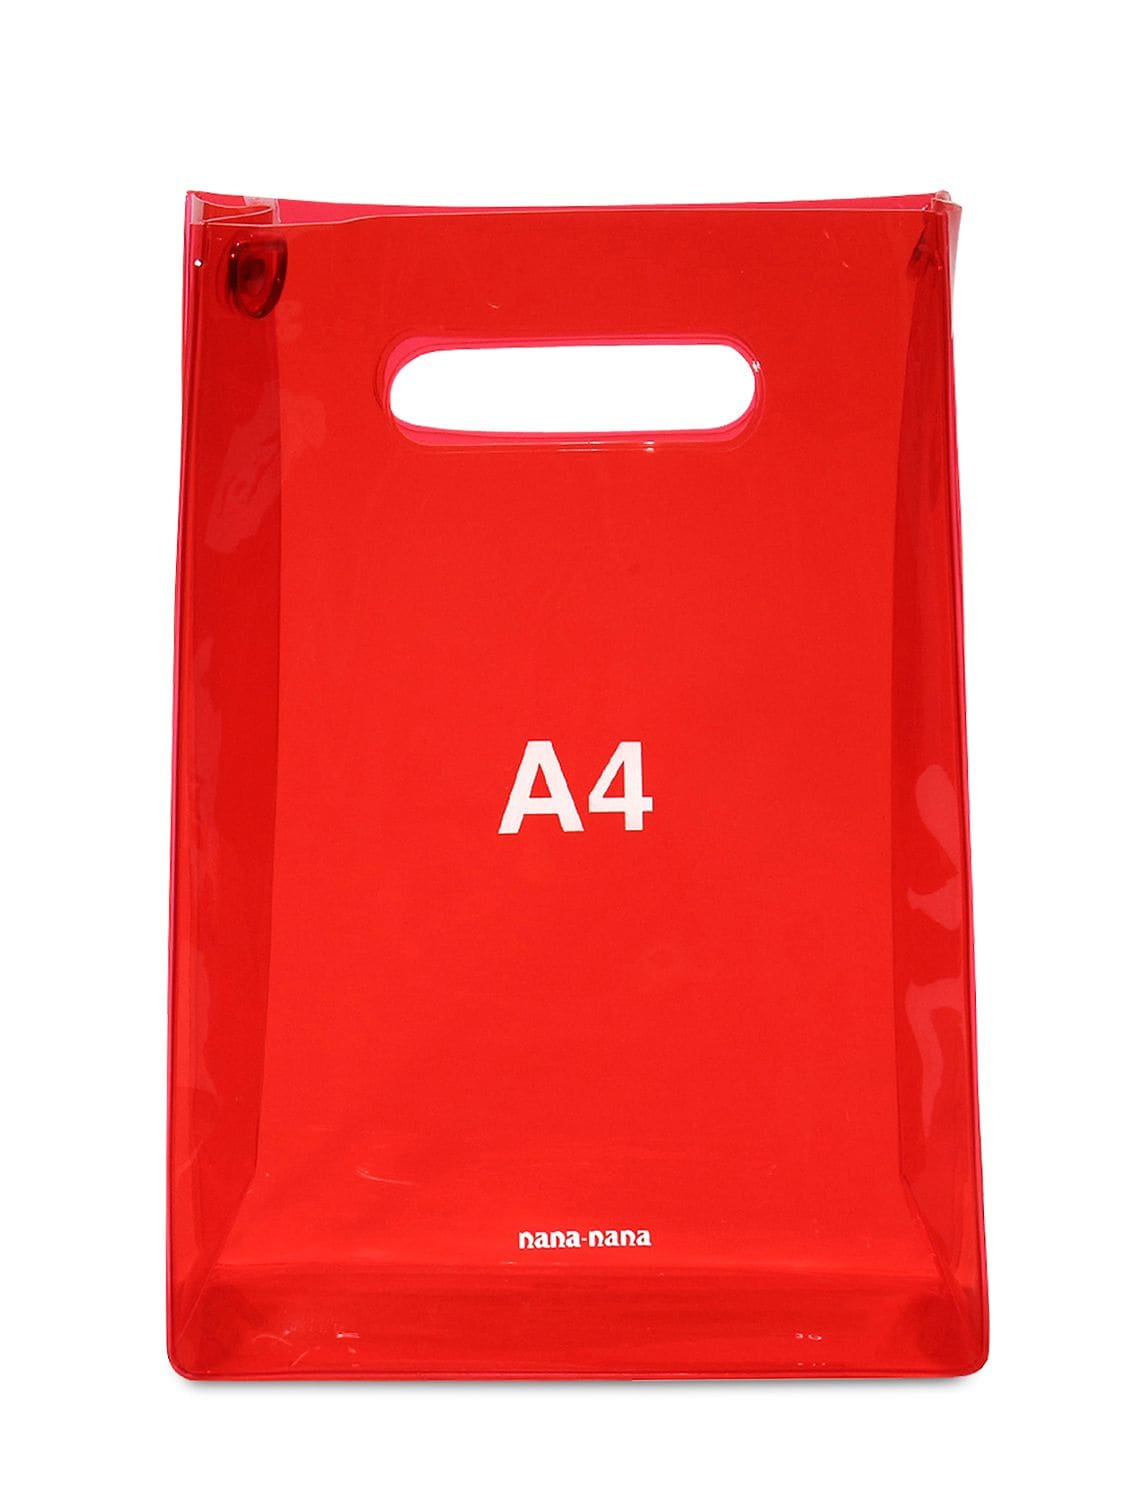 Nana-nana A4 Pvc Shopping Bag In Red